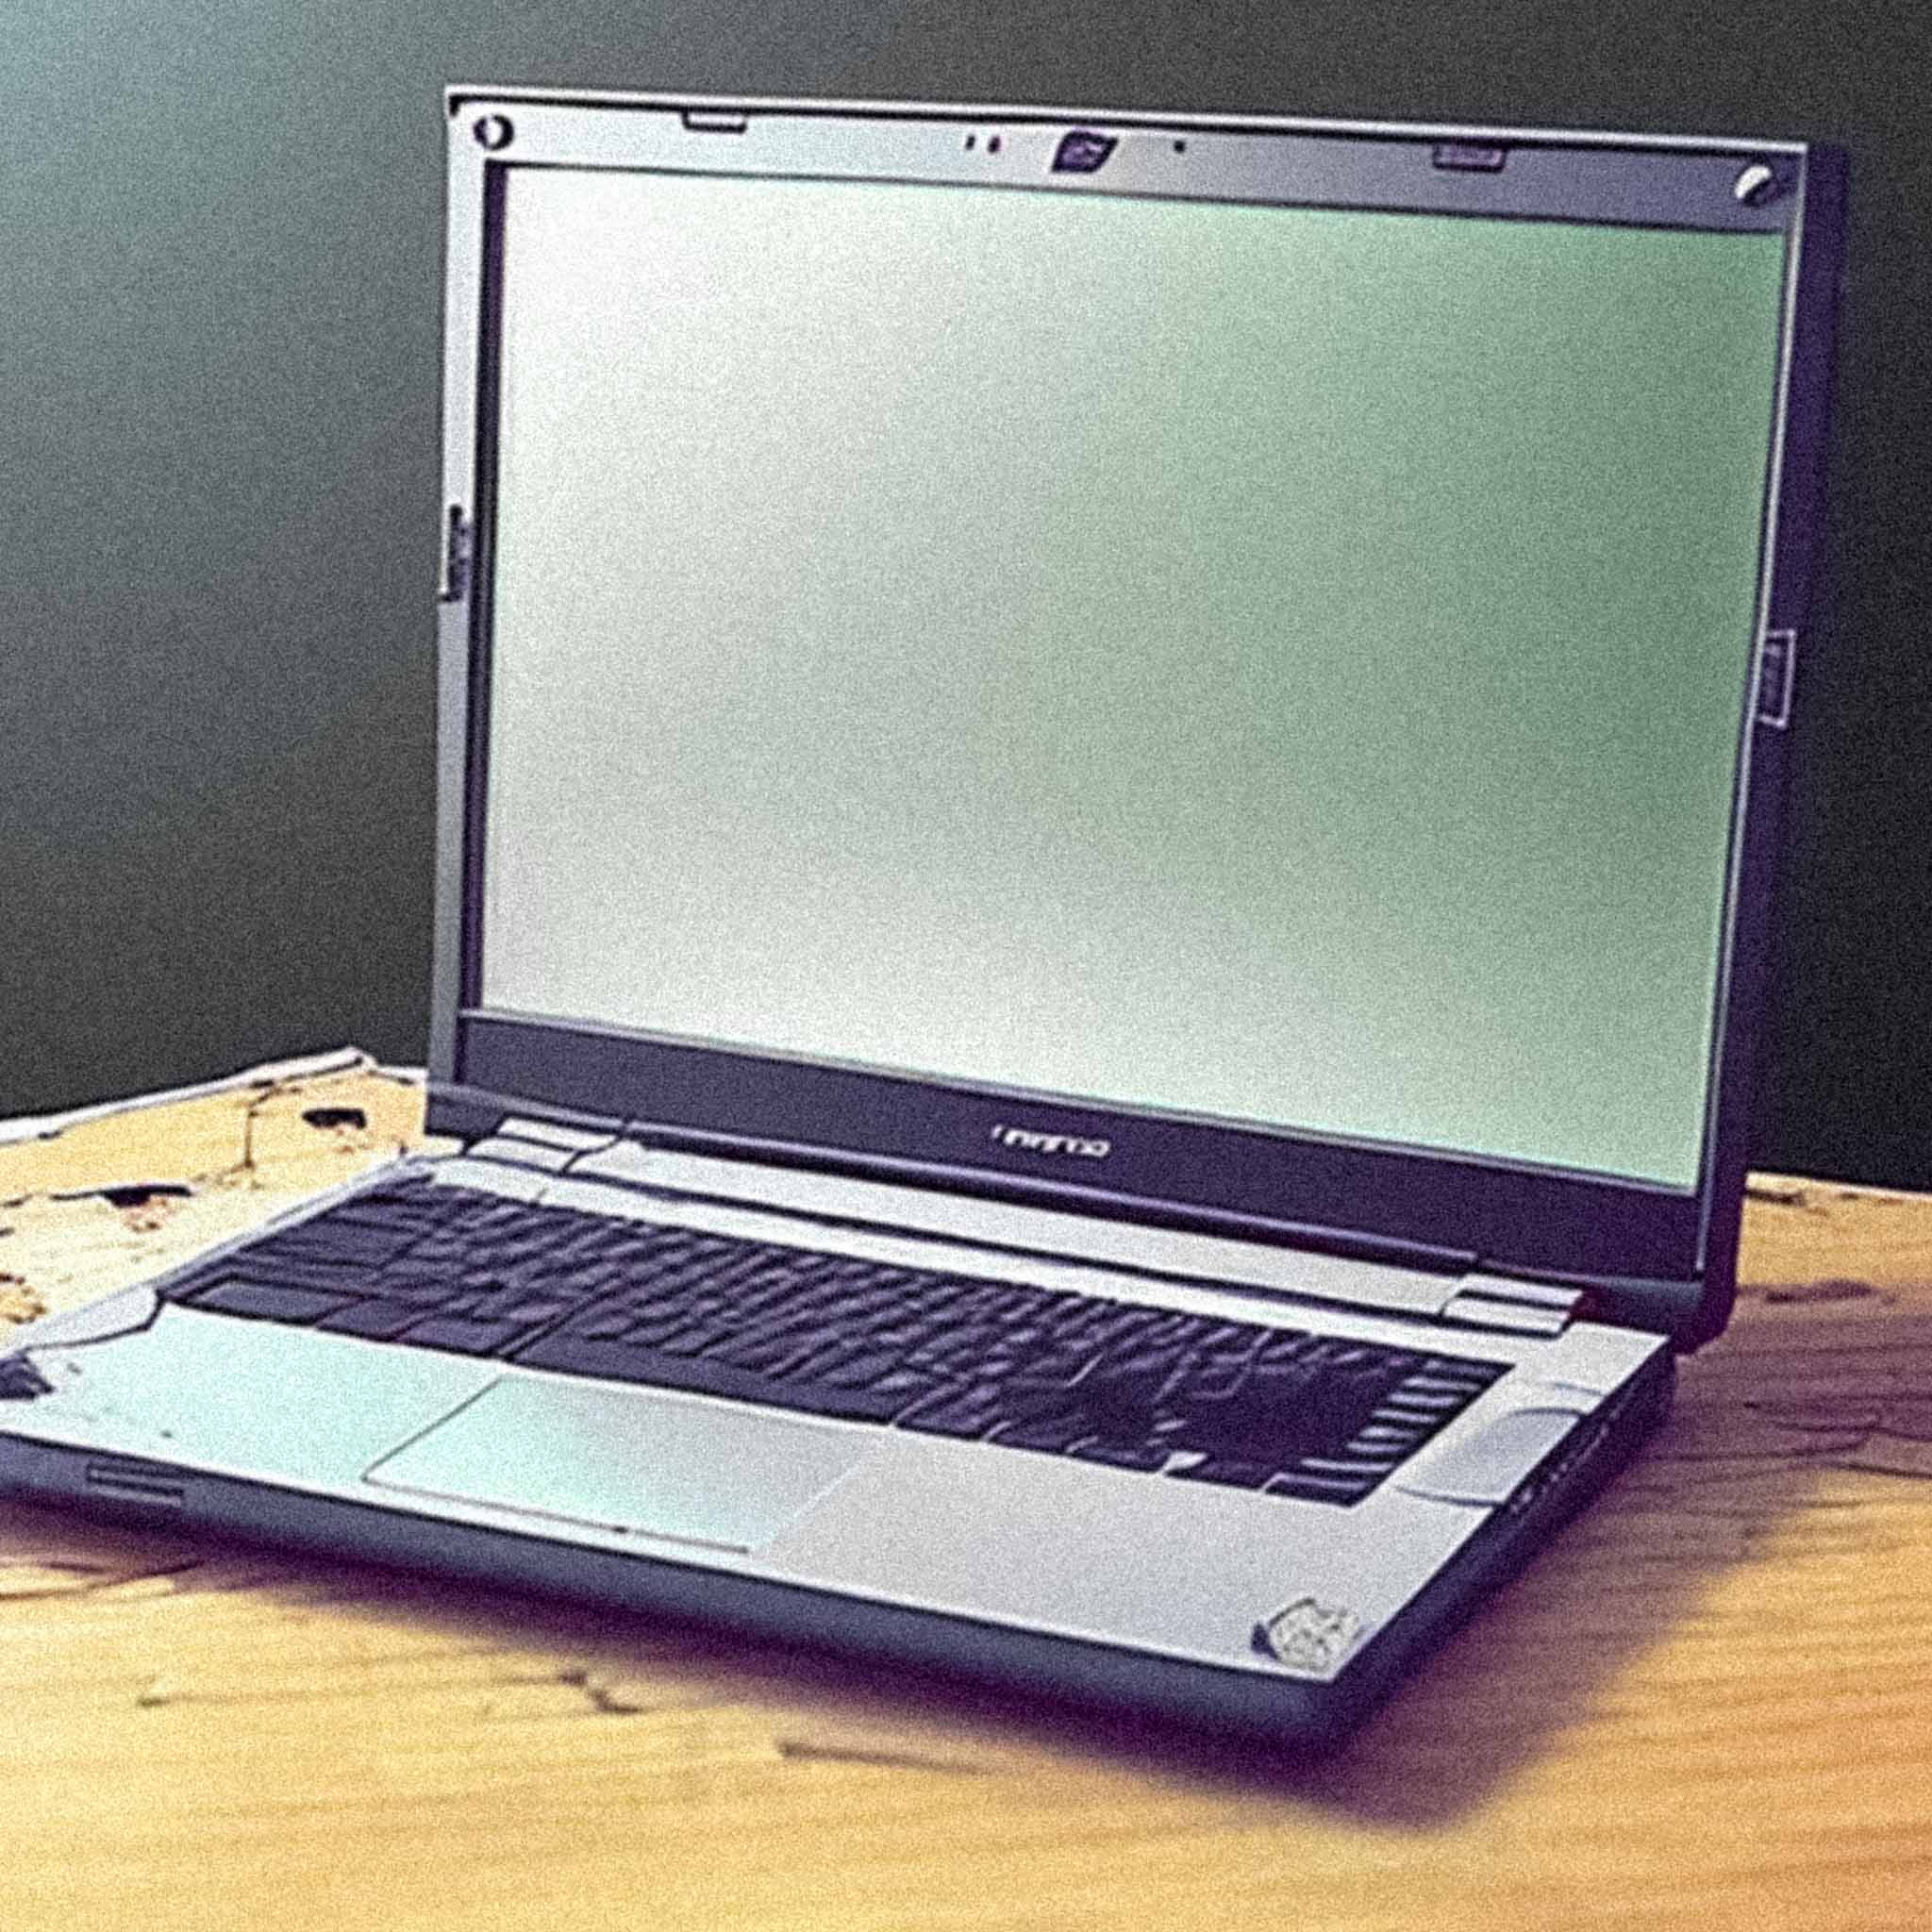 Jigoro's Broken Laptop.jpg